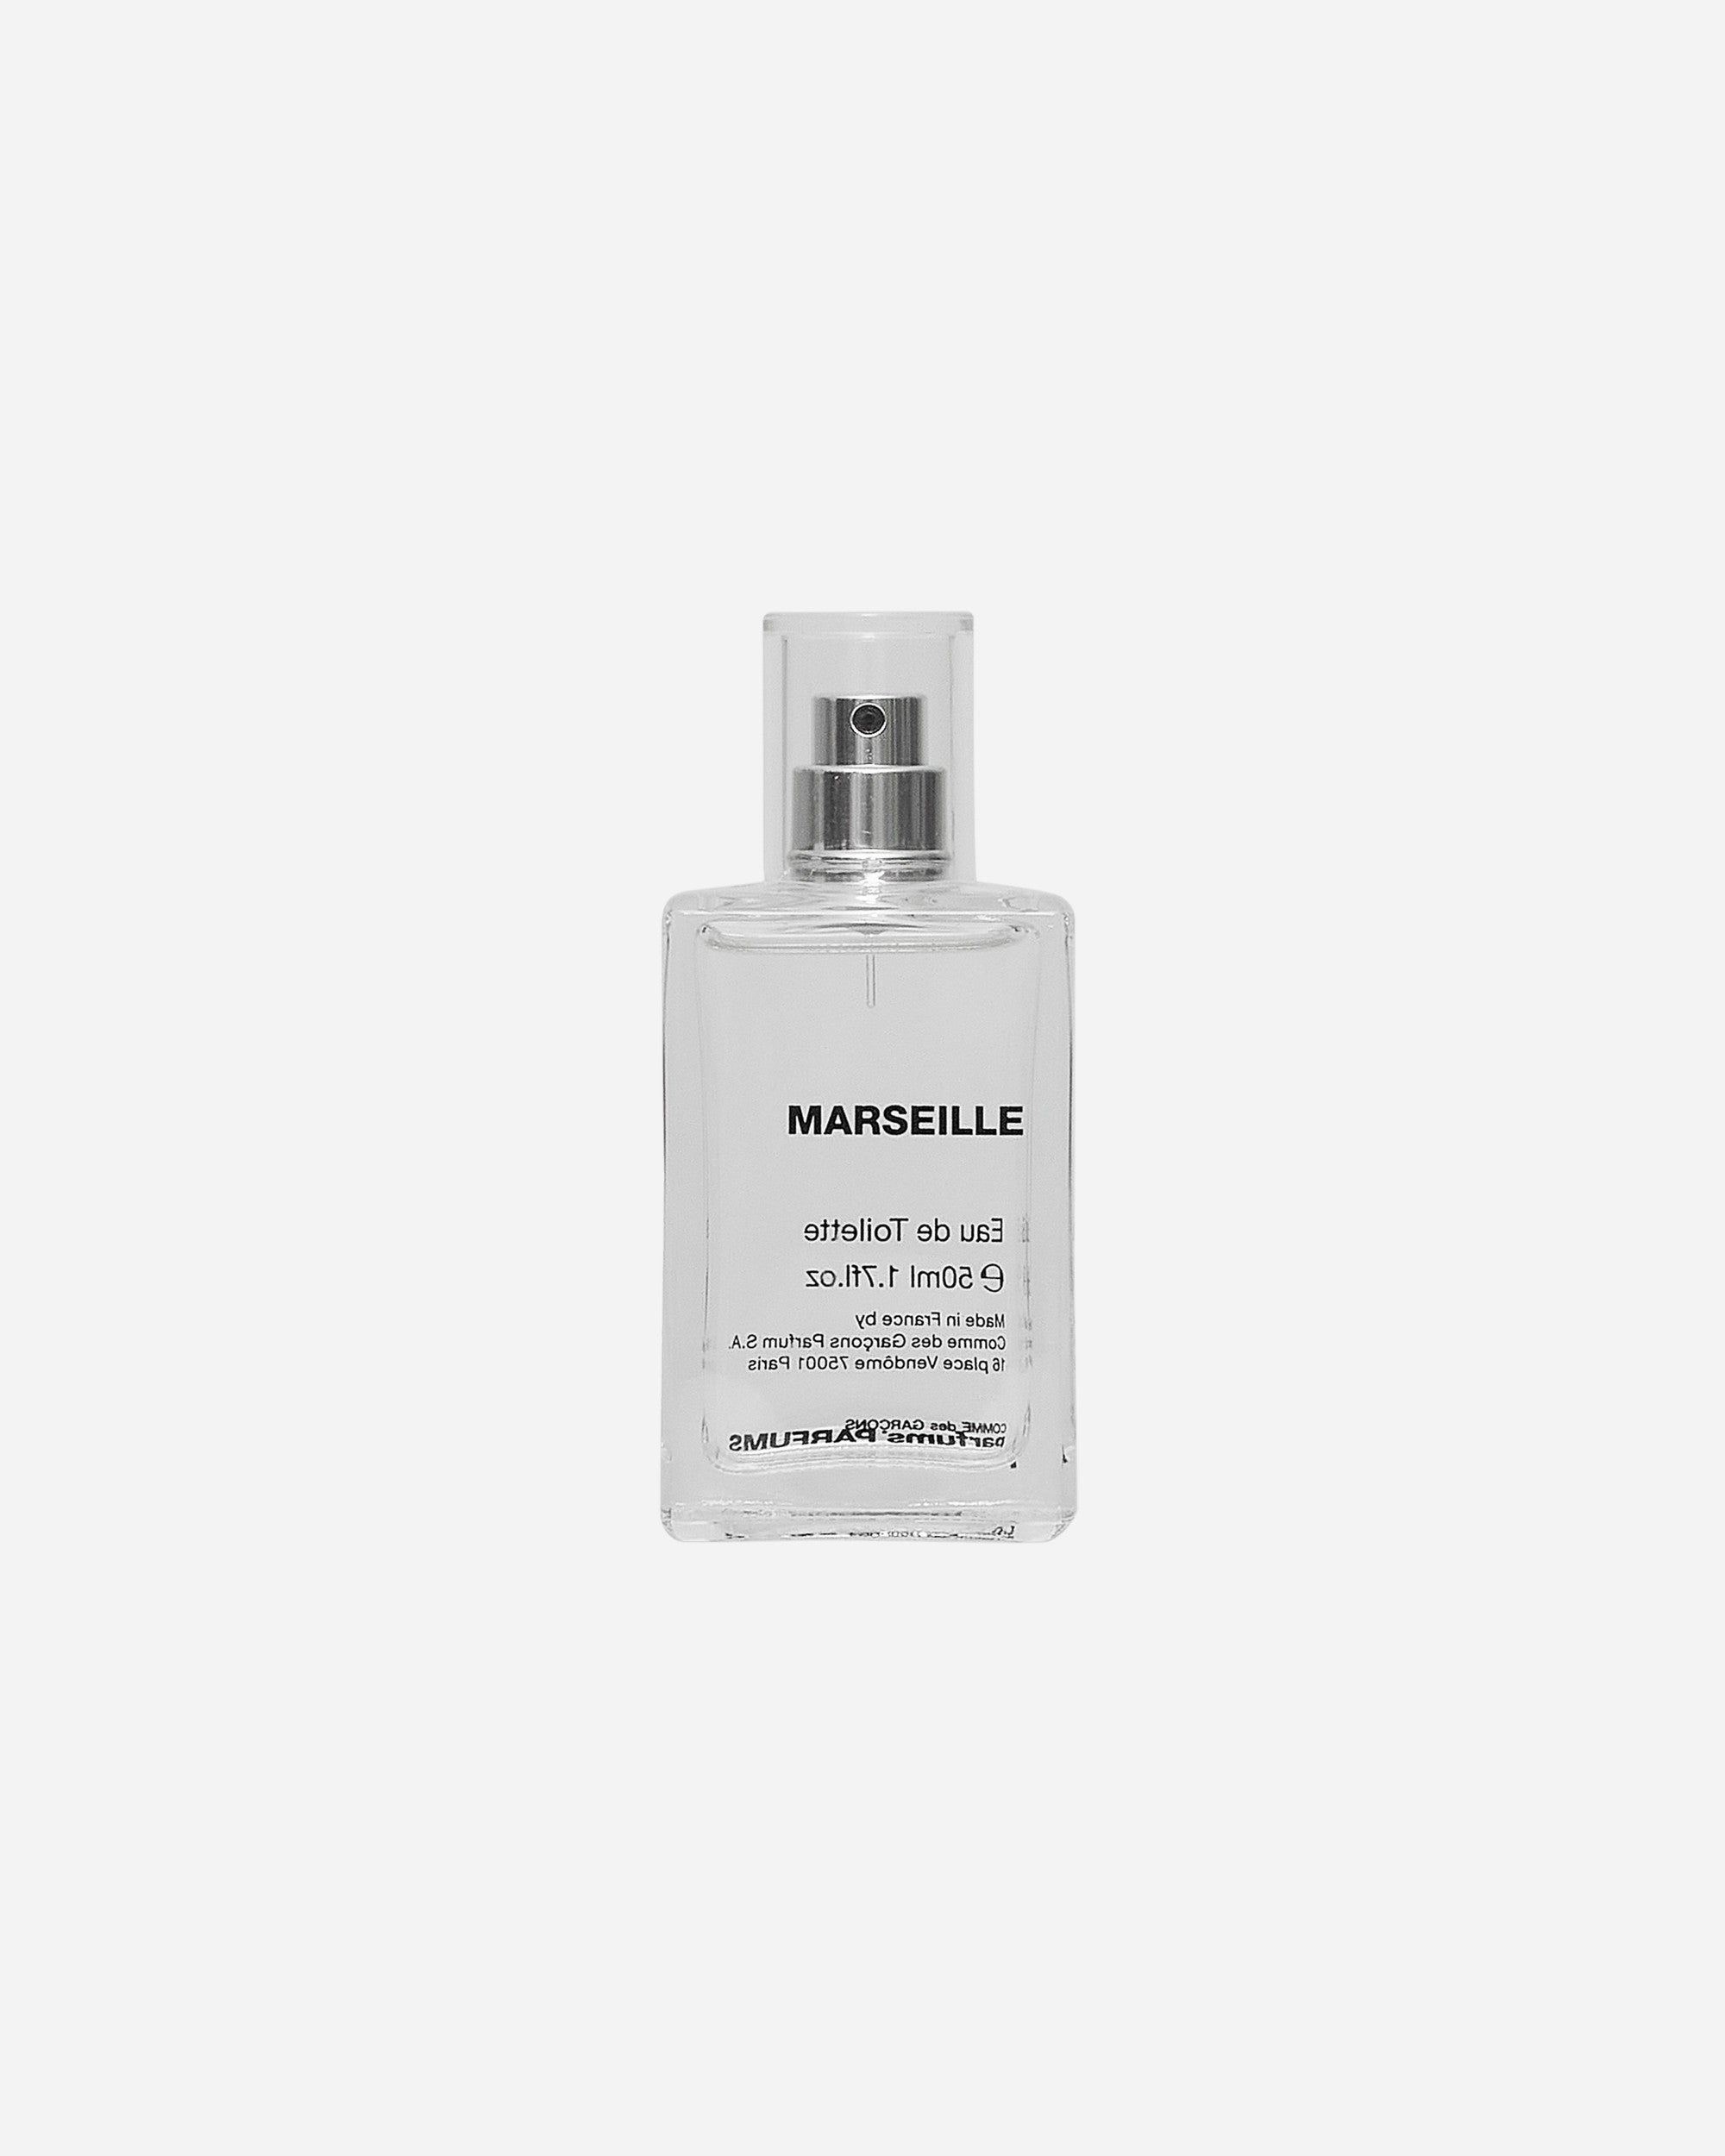 Comme Des Garcons Parfum Marseille Multi Grooming Fragrances CDGMARS50 001